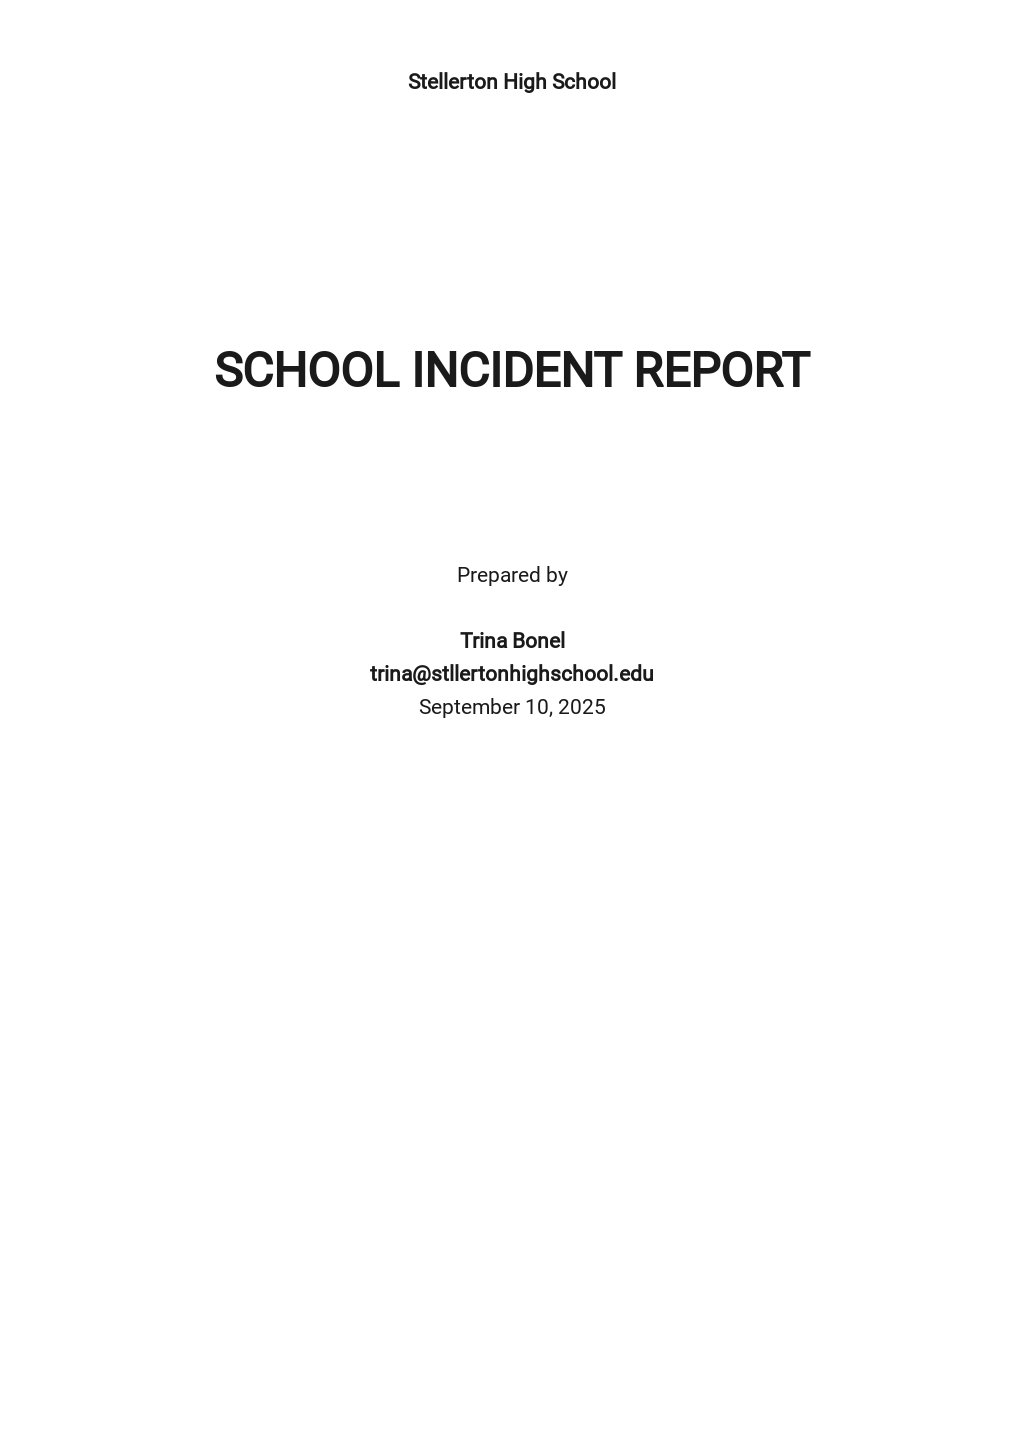 School Incident Report Form Template.jpe